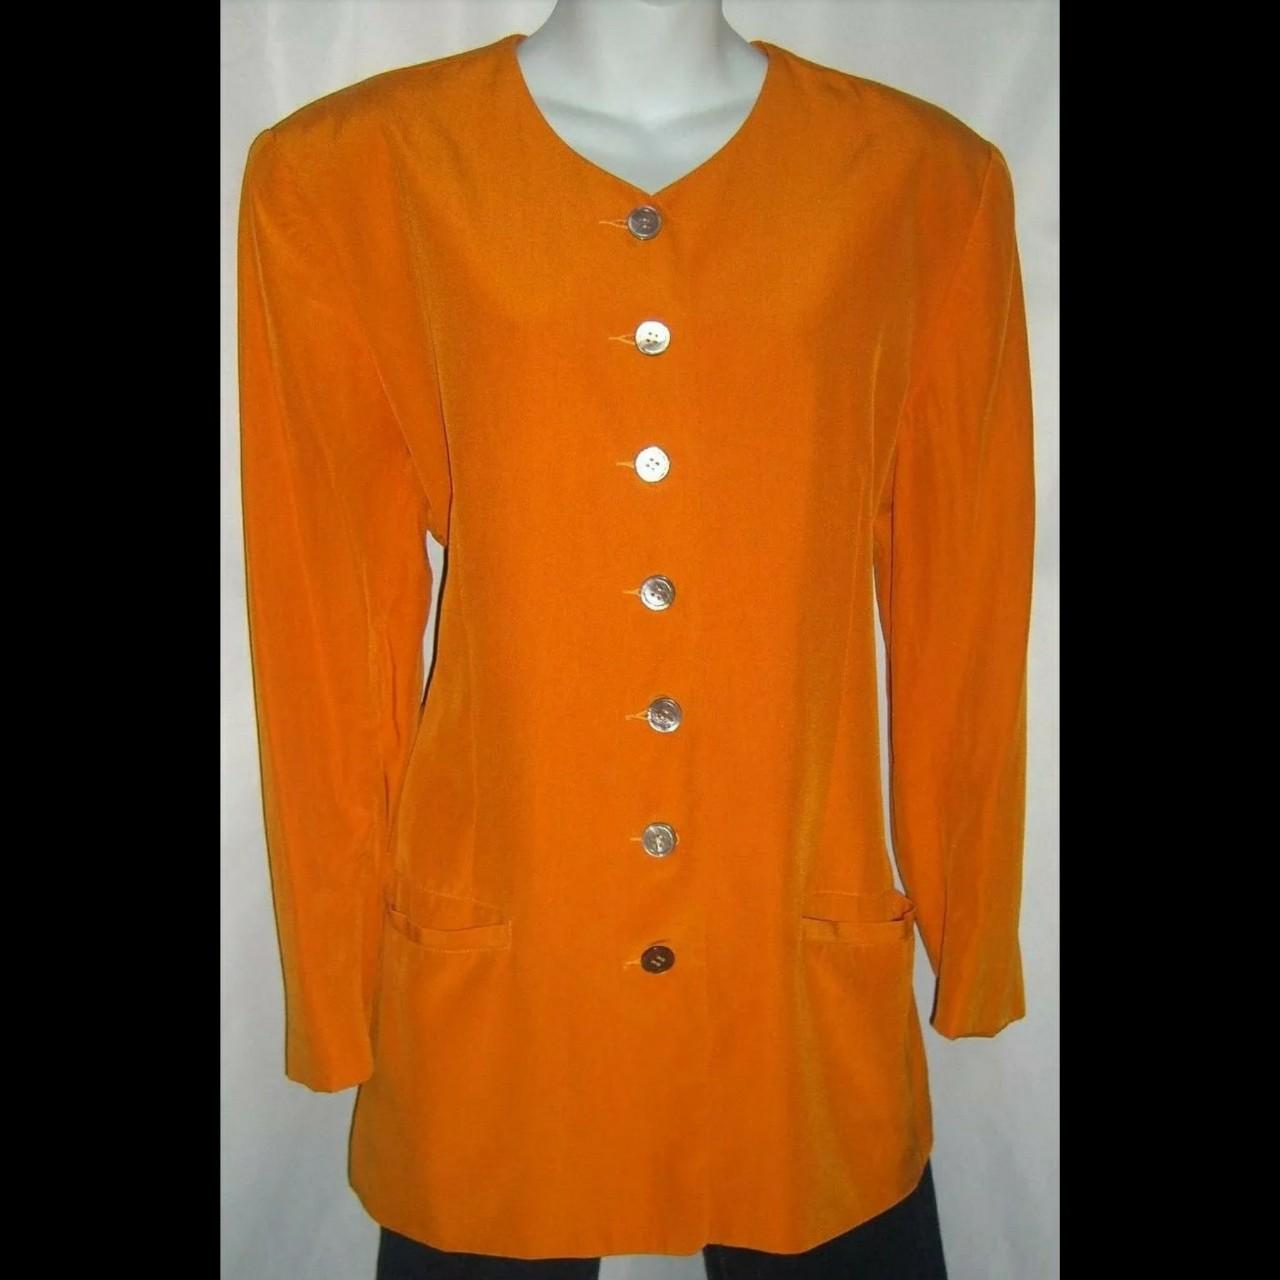 Adrienne Vittadini Women's Orange Jacket | Depop